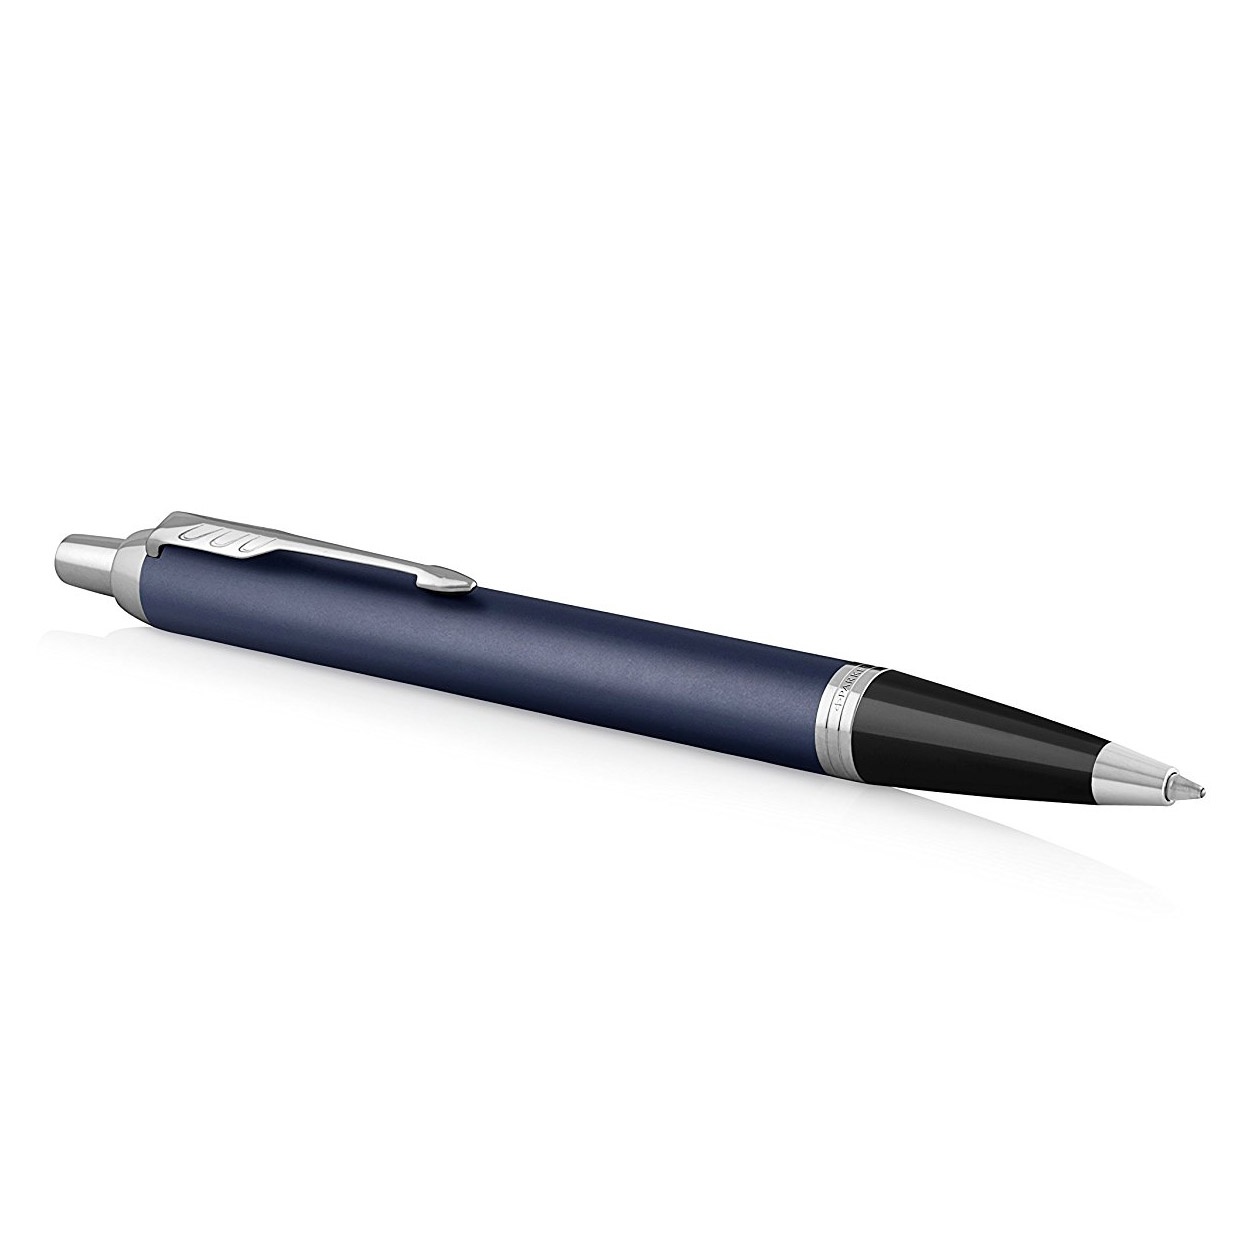 IM Blue/Chrome Ballpoint in the group Pens / Fine Writing / Ballpoint Pens at Pen Store (104672)